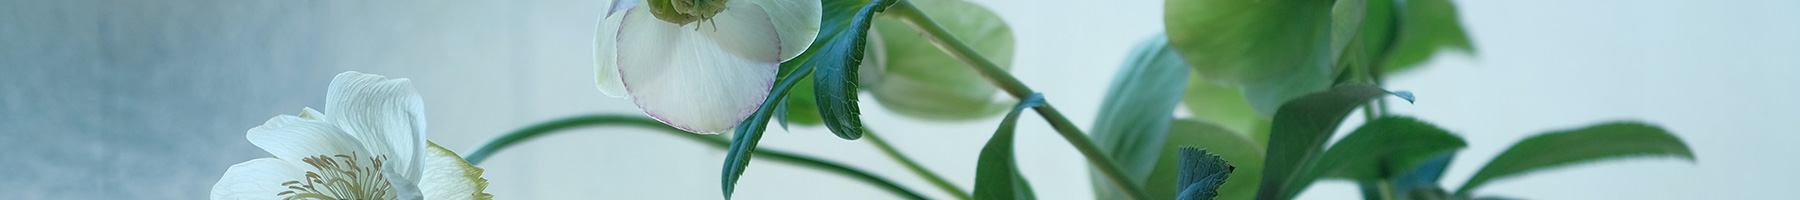 Helleborus, a flower associated with penance